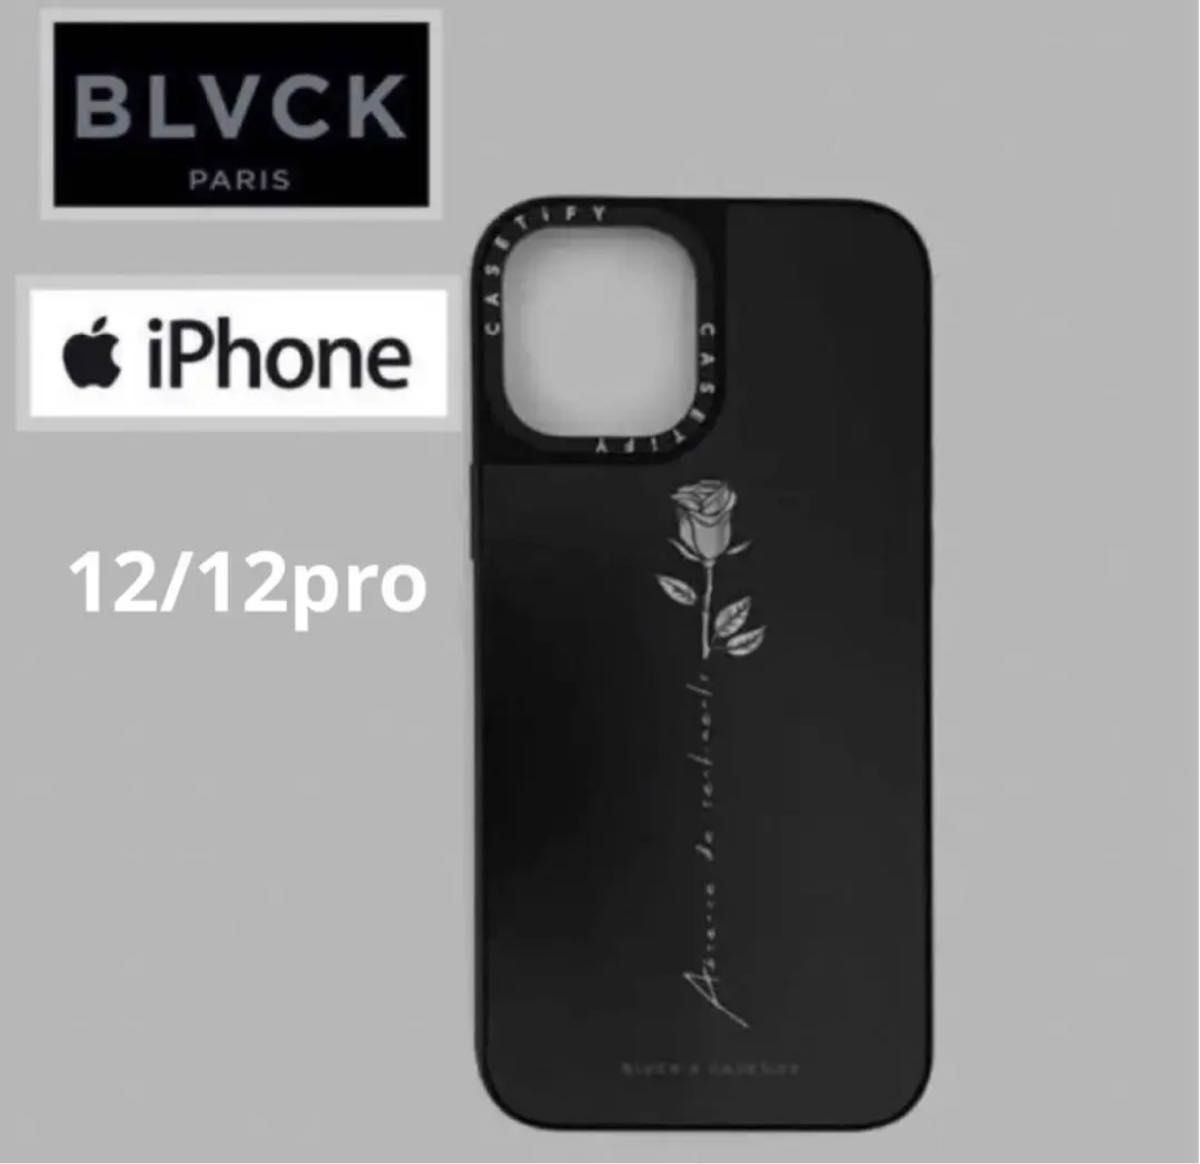 BLACK Paris ブラックパリ iPhone12 12pro ケース